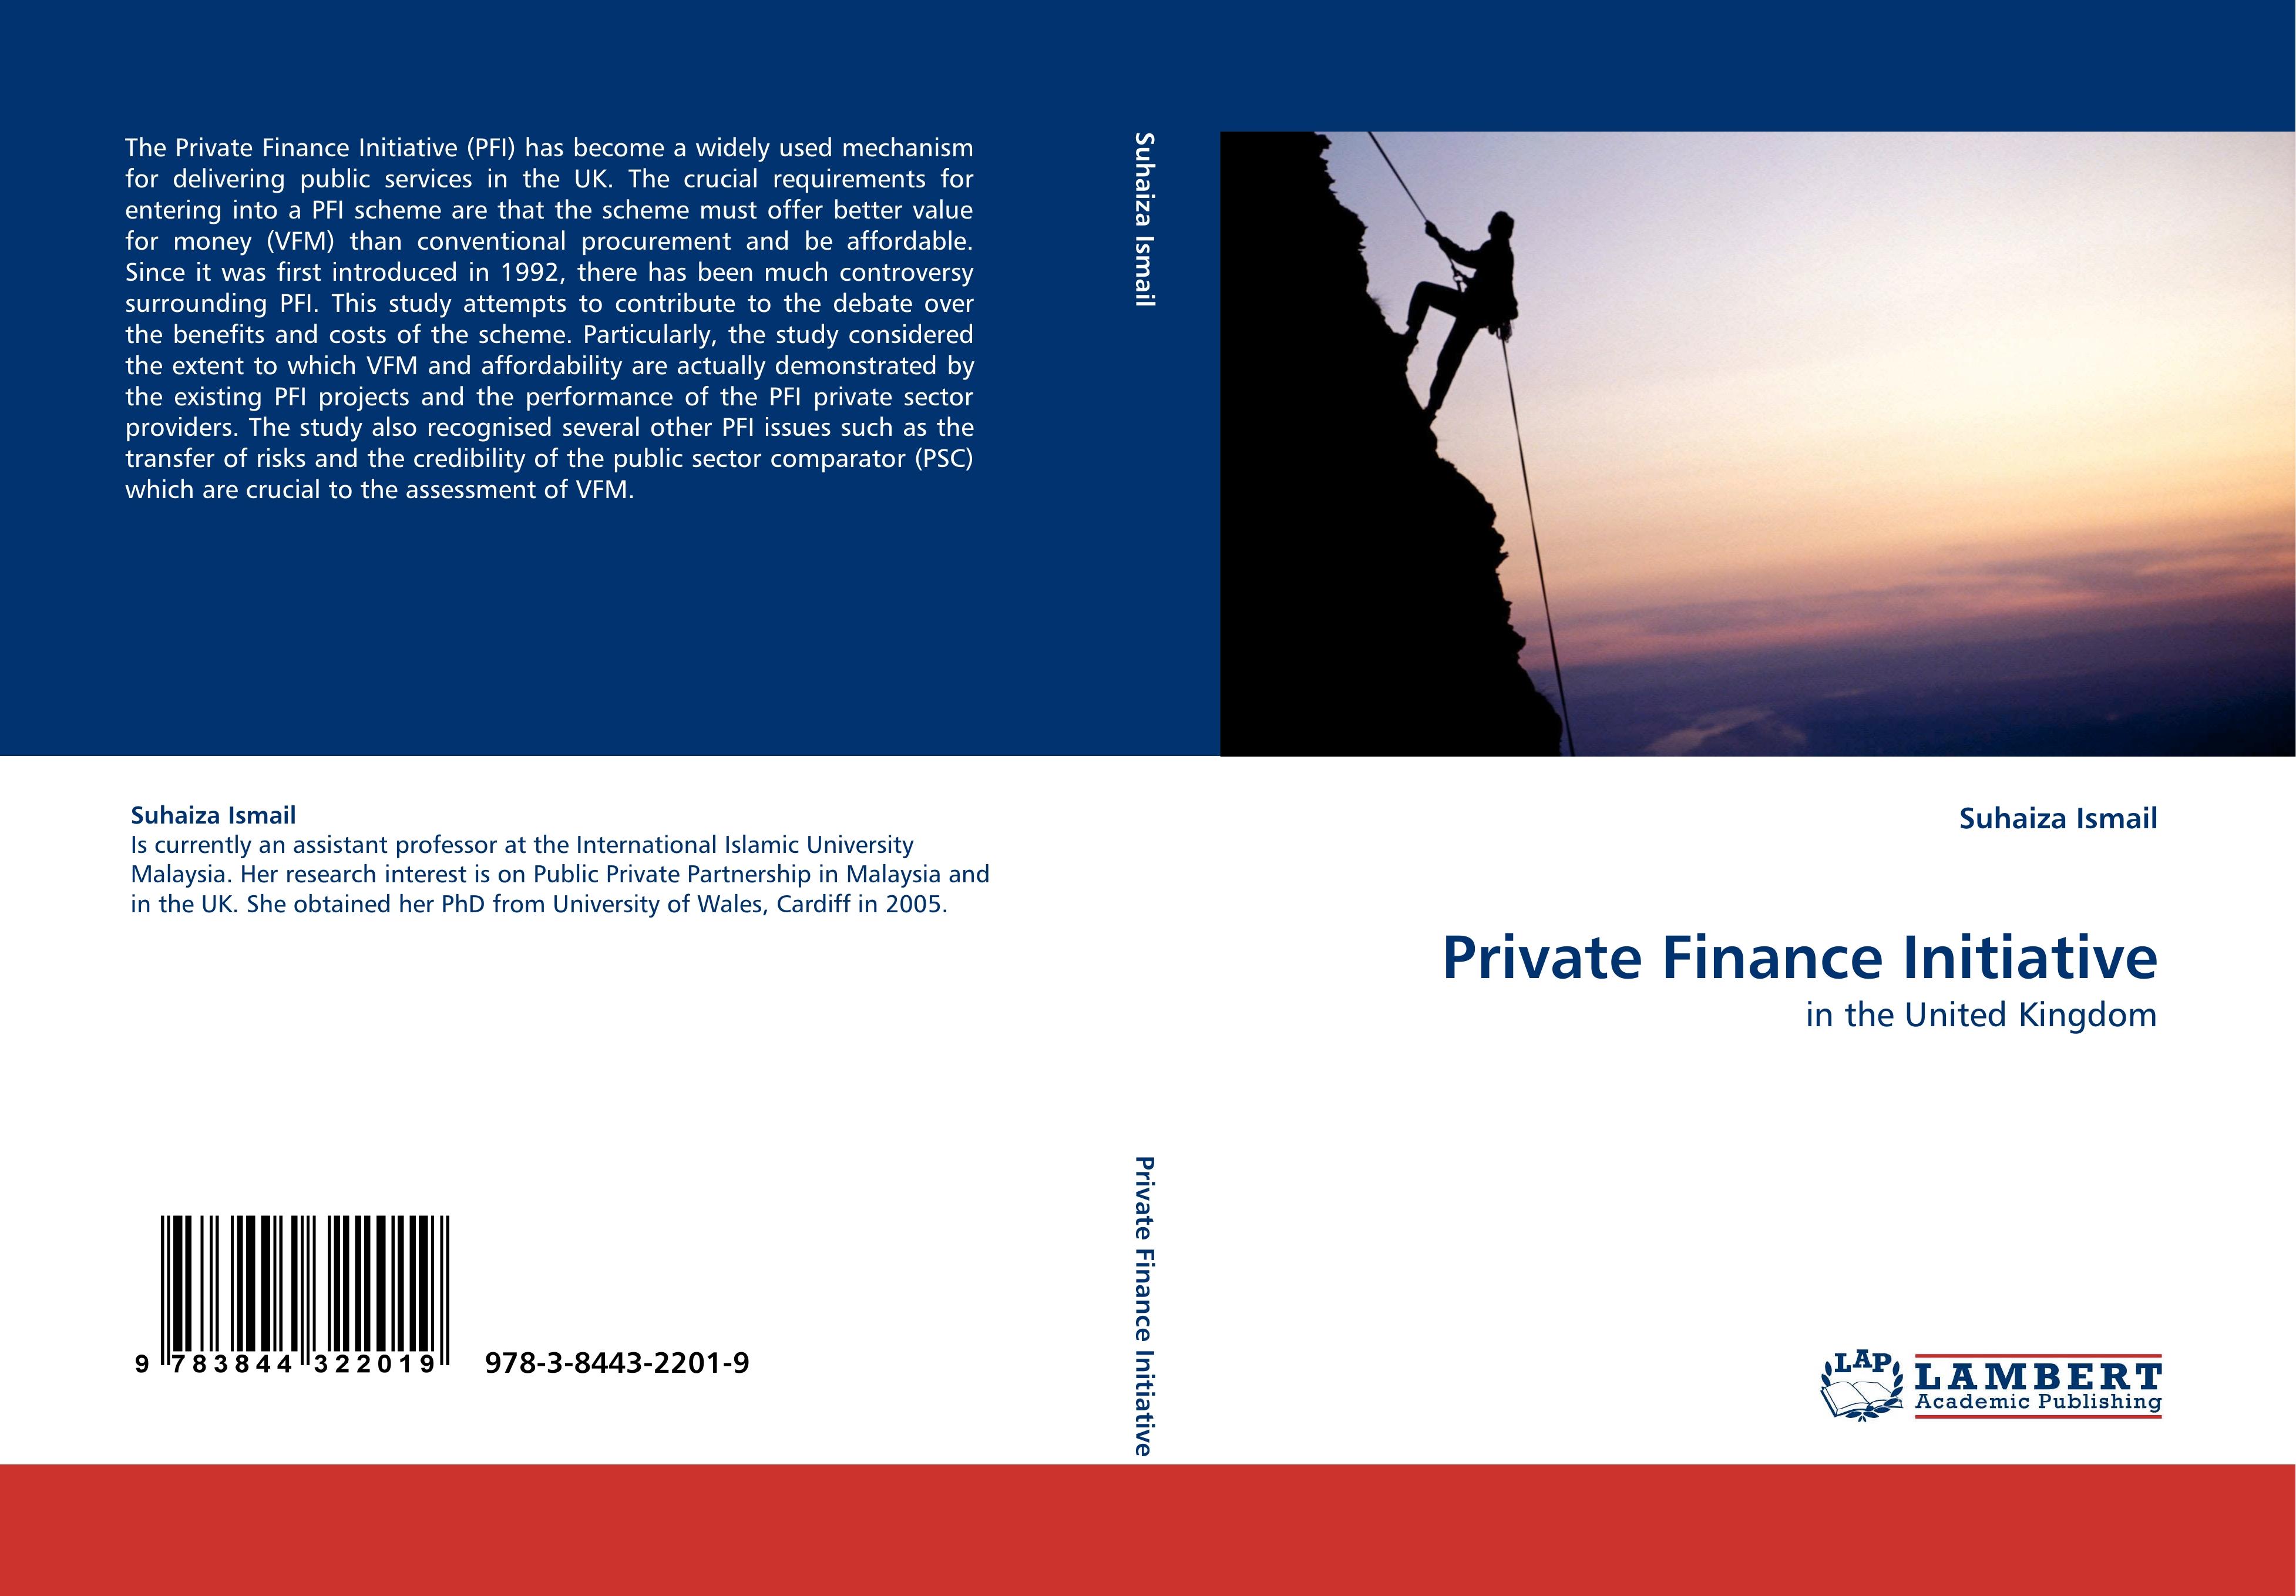 Private Finance Initiative - Suhaiza Ismail